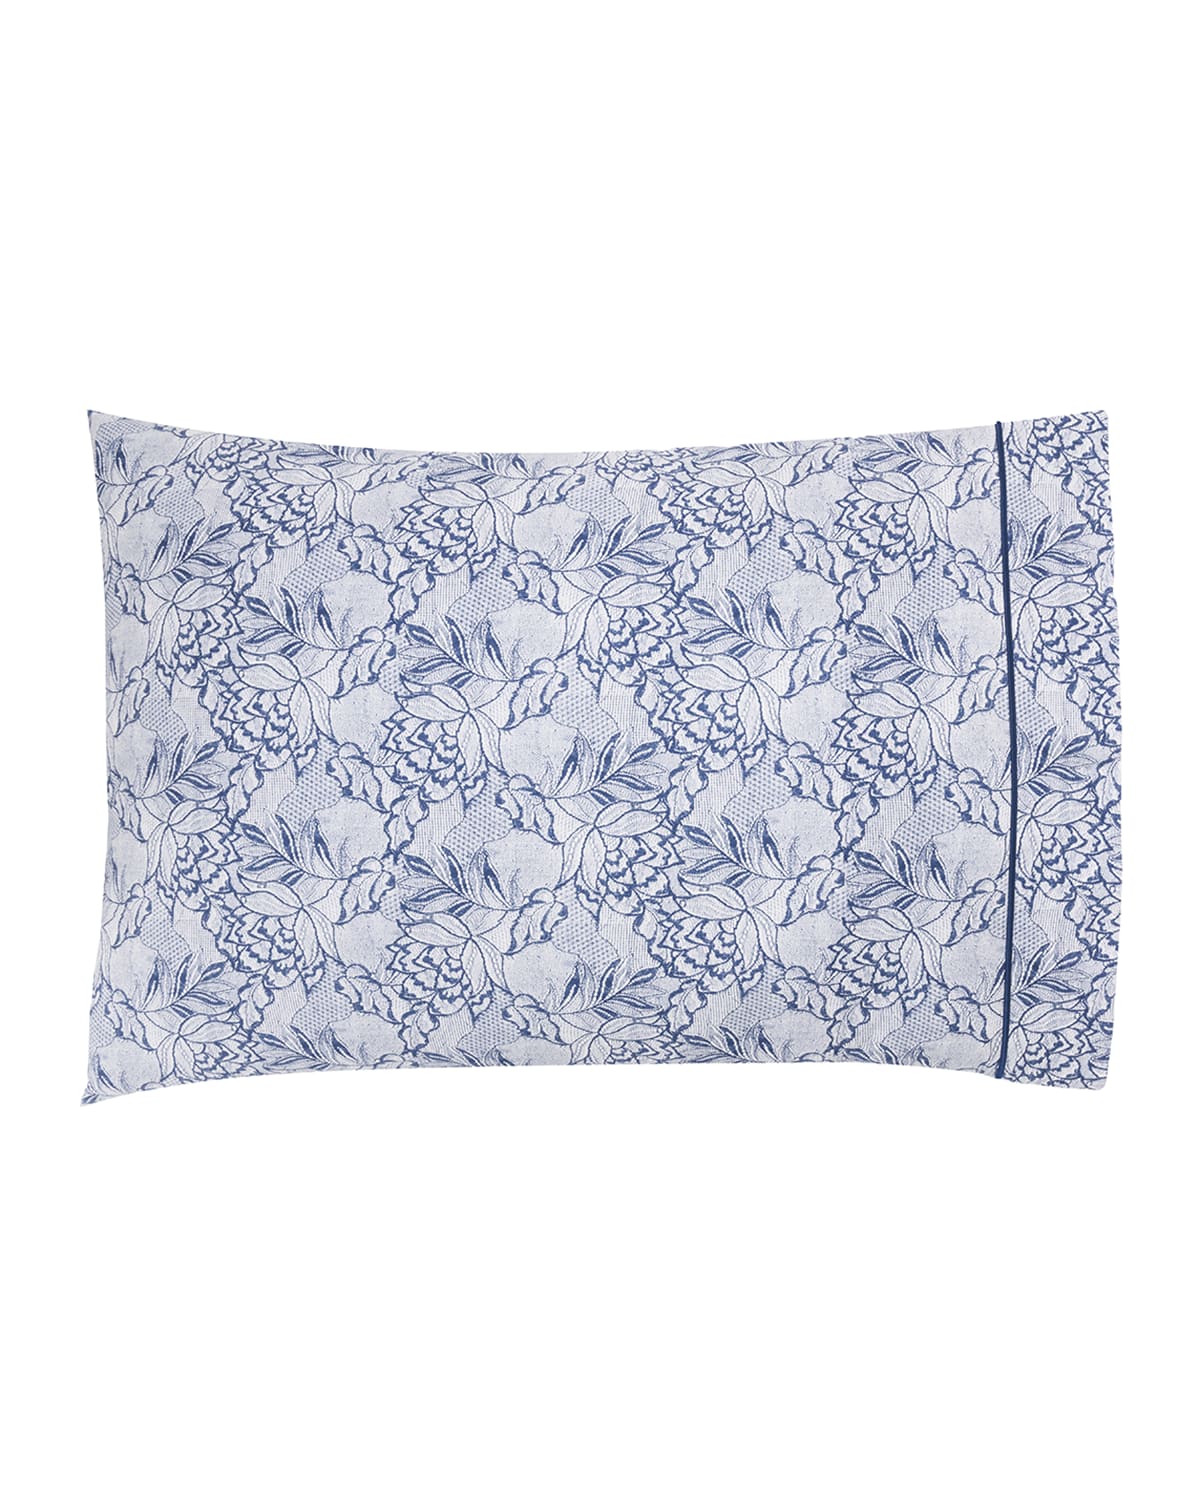 Image Anne de Solene Gabrielle Standard Pillowcases, Set of 2